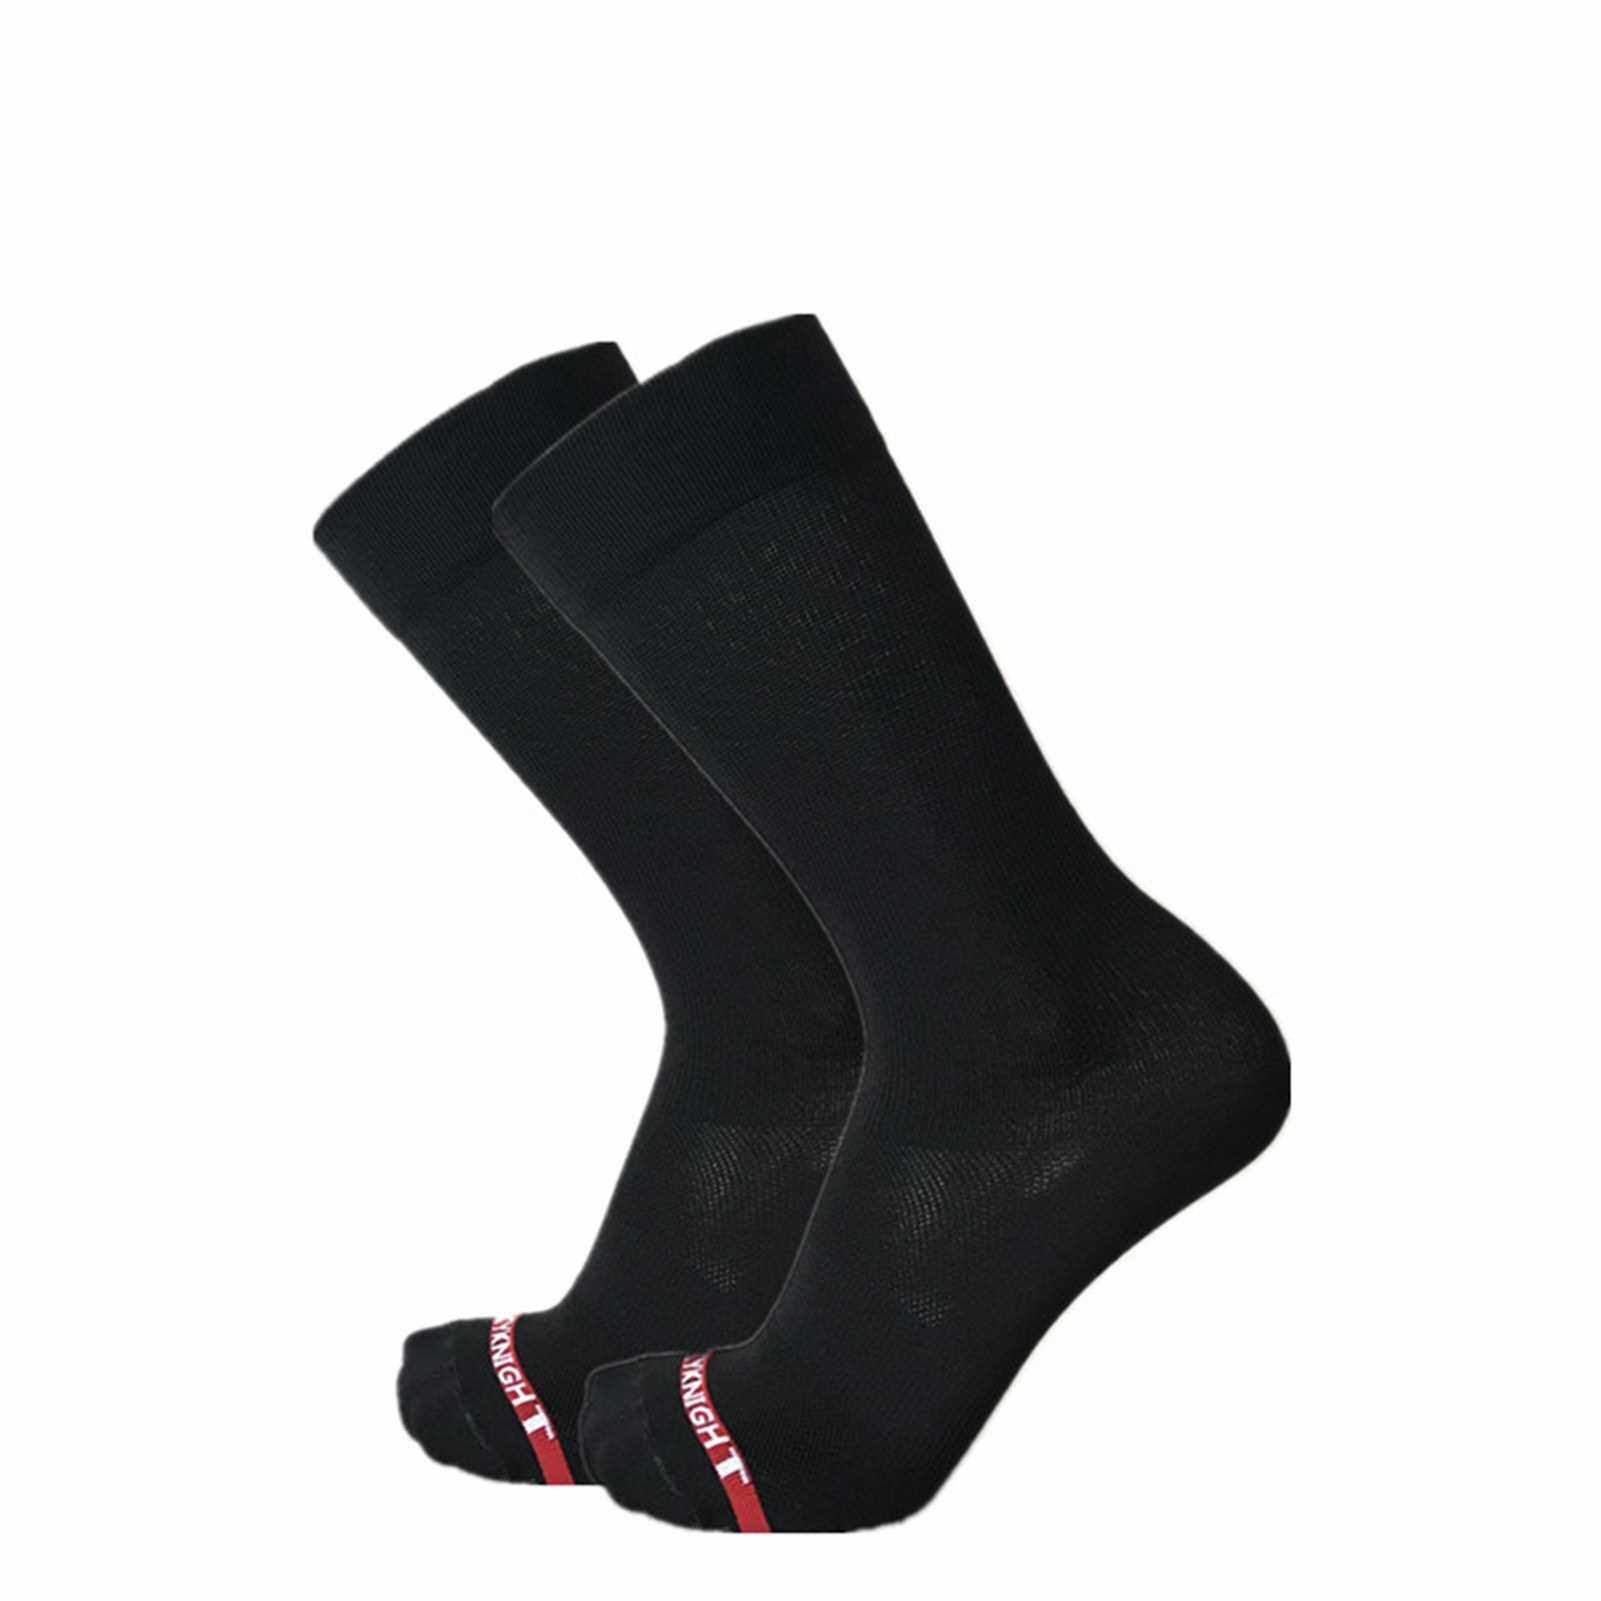 BEST SELLER Outdoor Sports Cycling Socks Stretch Socks Breathable Bike Socks for Men Women (Black)